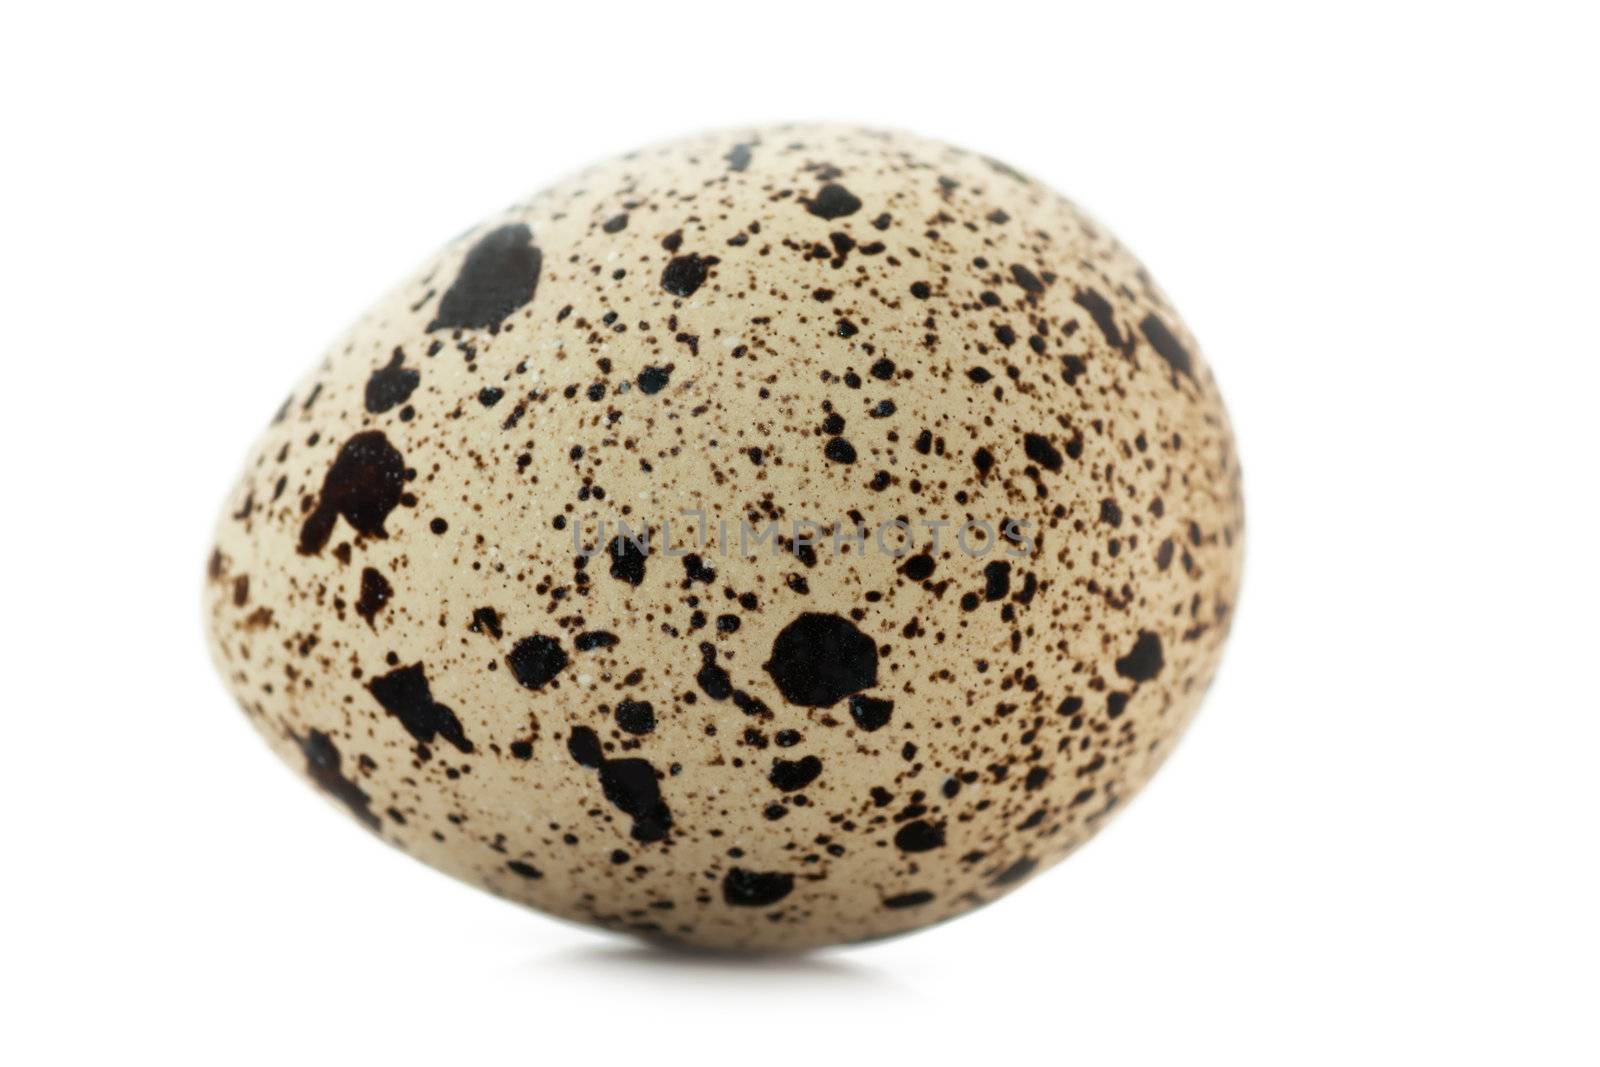 One quail egg isolated on white